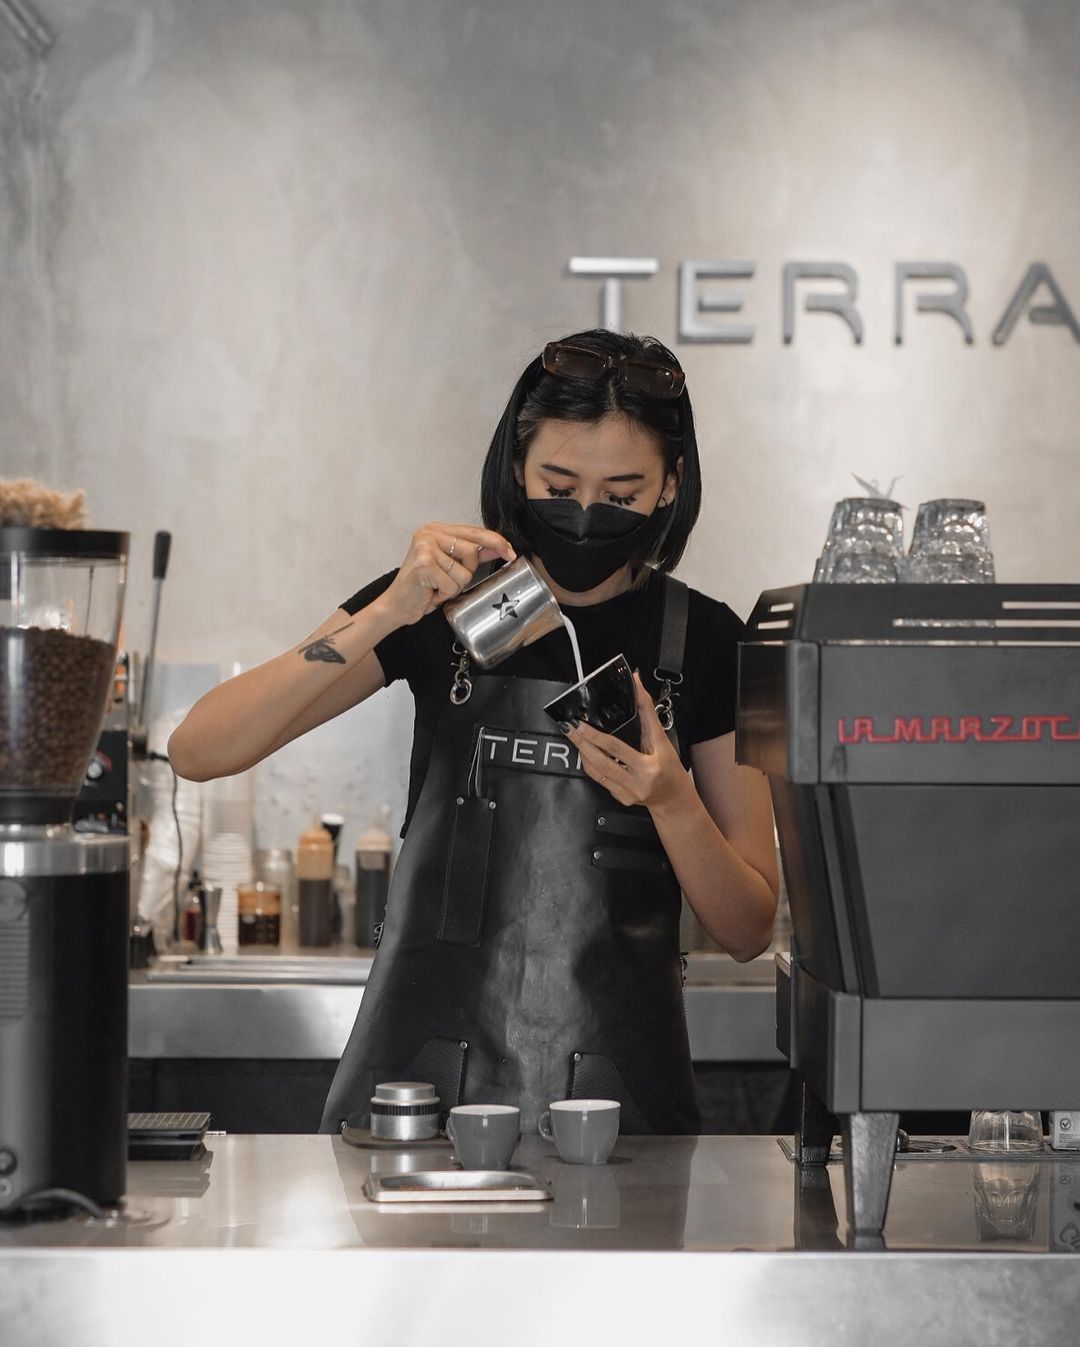 Jam Buka Coffee At Terra Semarang